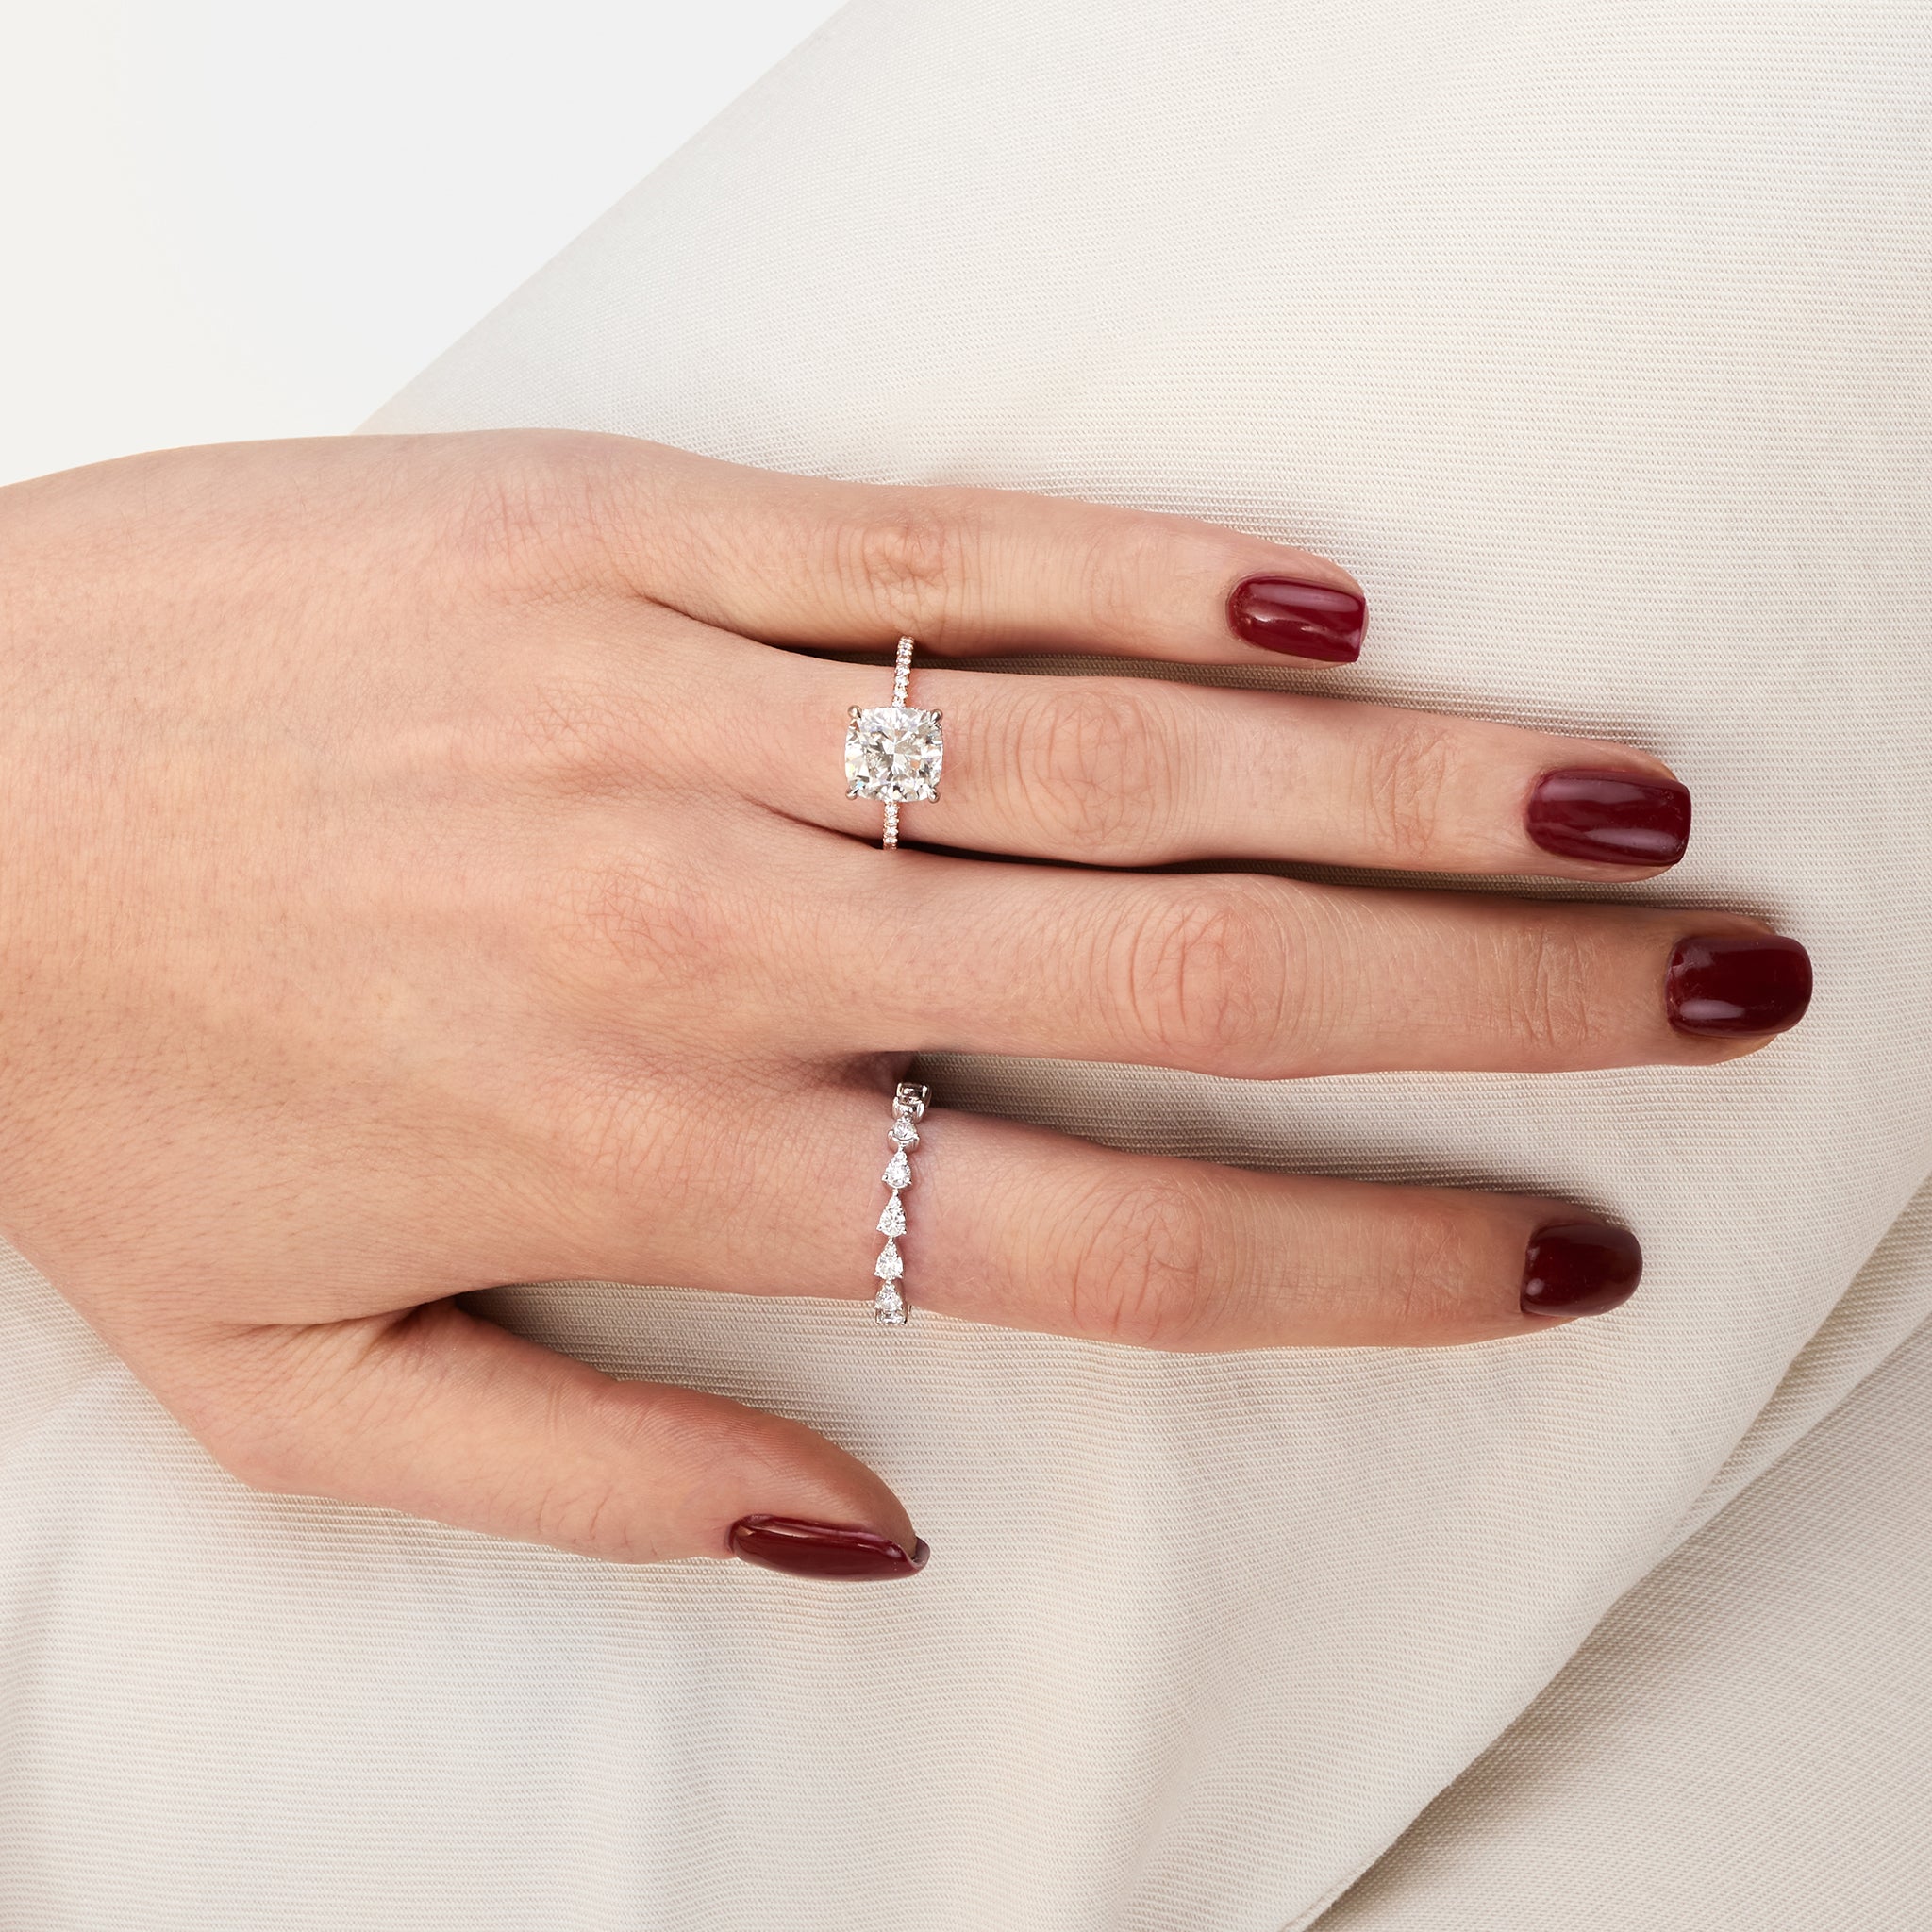 Cushion lab diamond pave engagement ring.